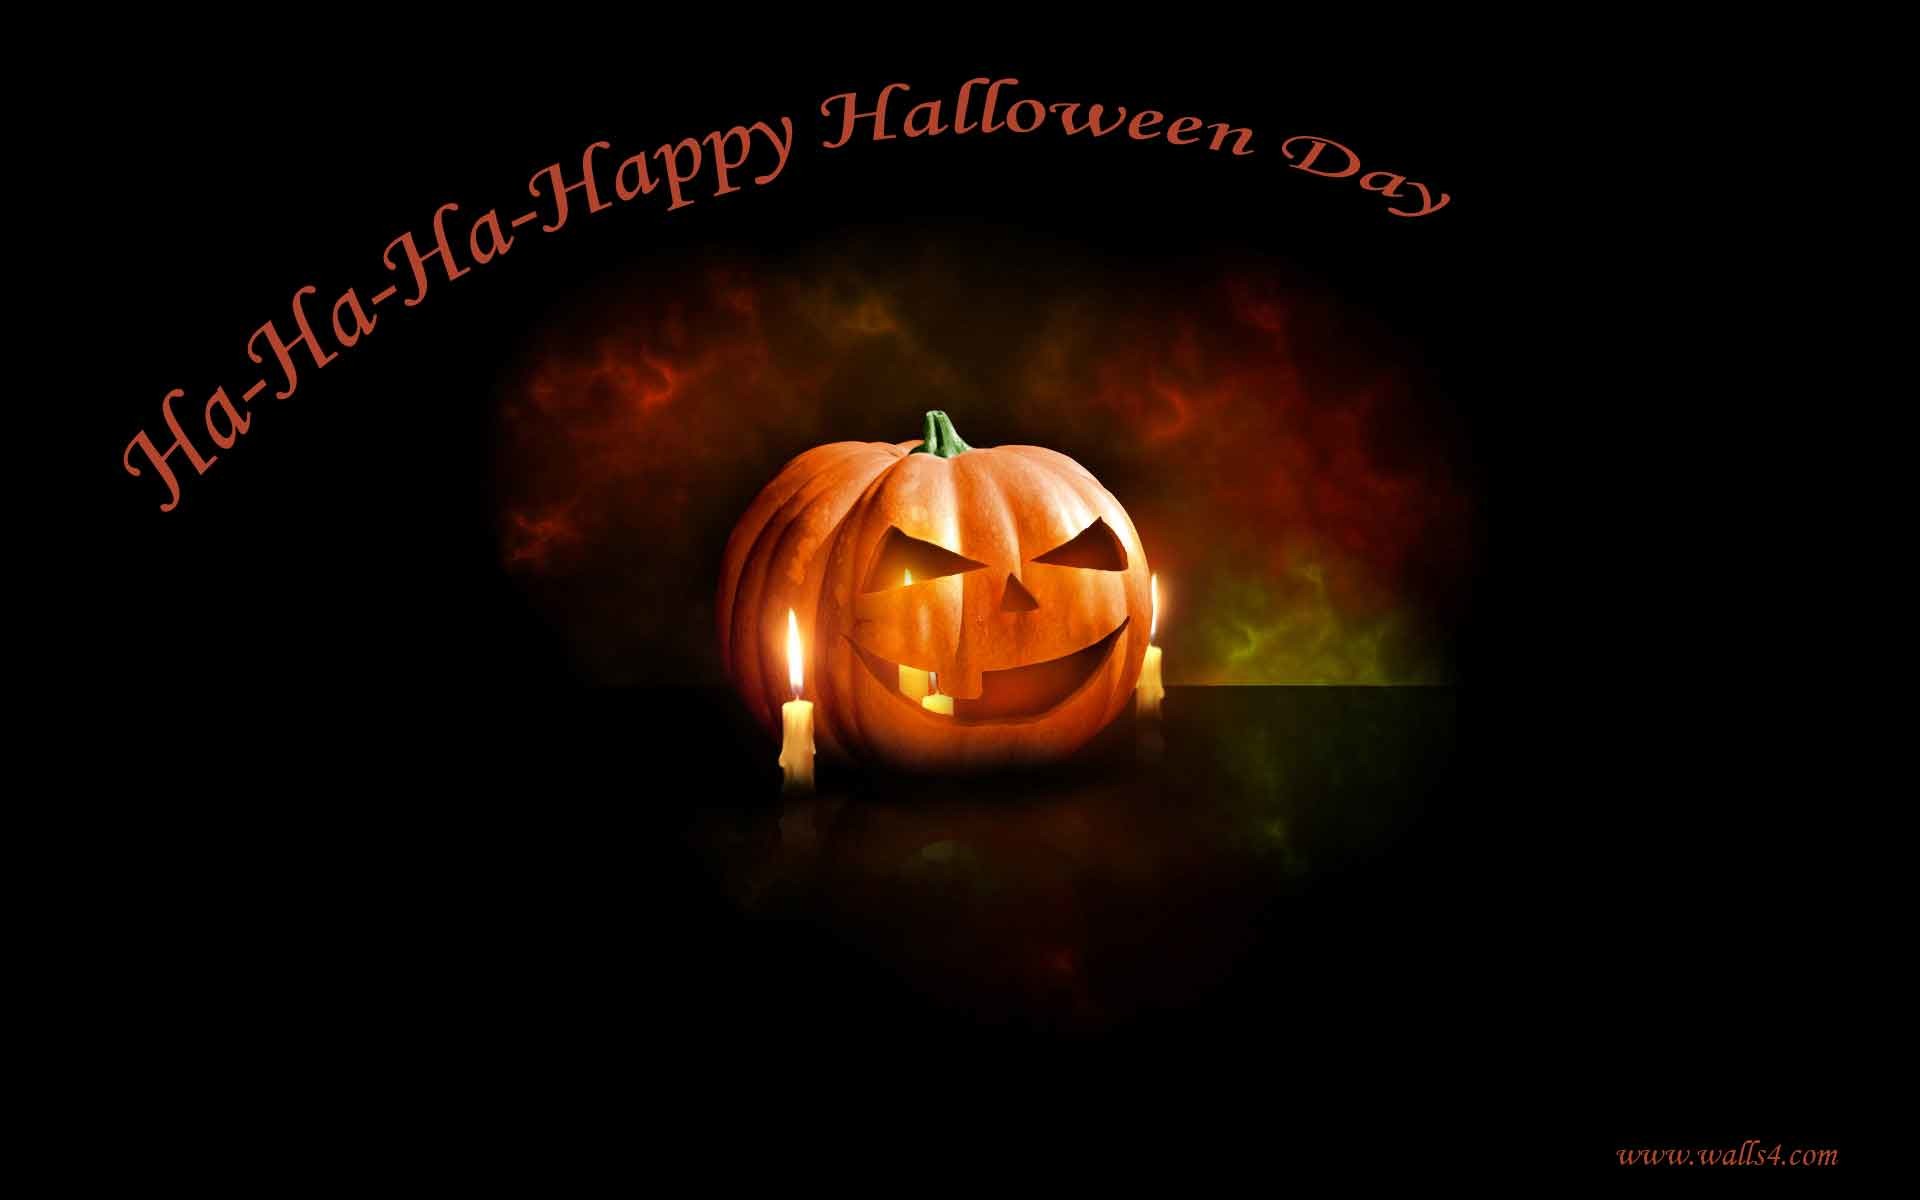 Free Wallpapers – Happy Halloween Day scary pumpkin wallpaper